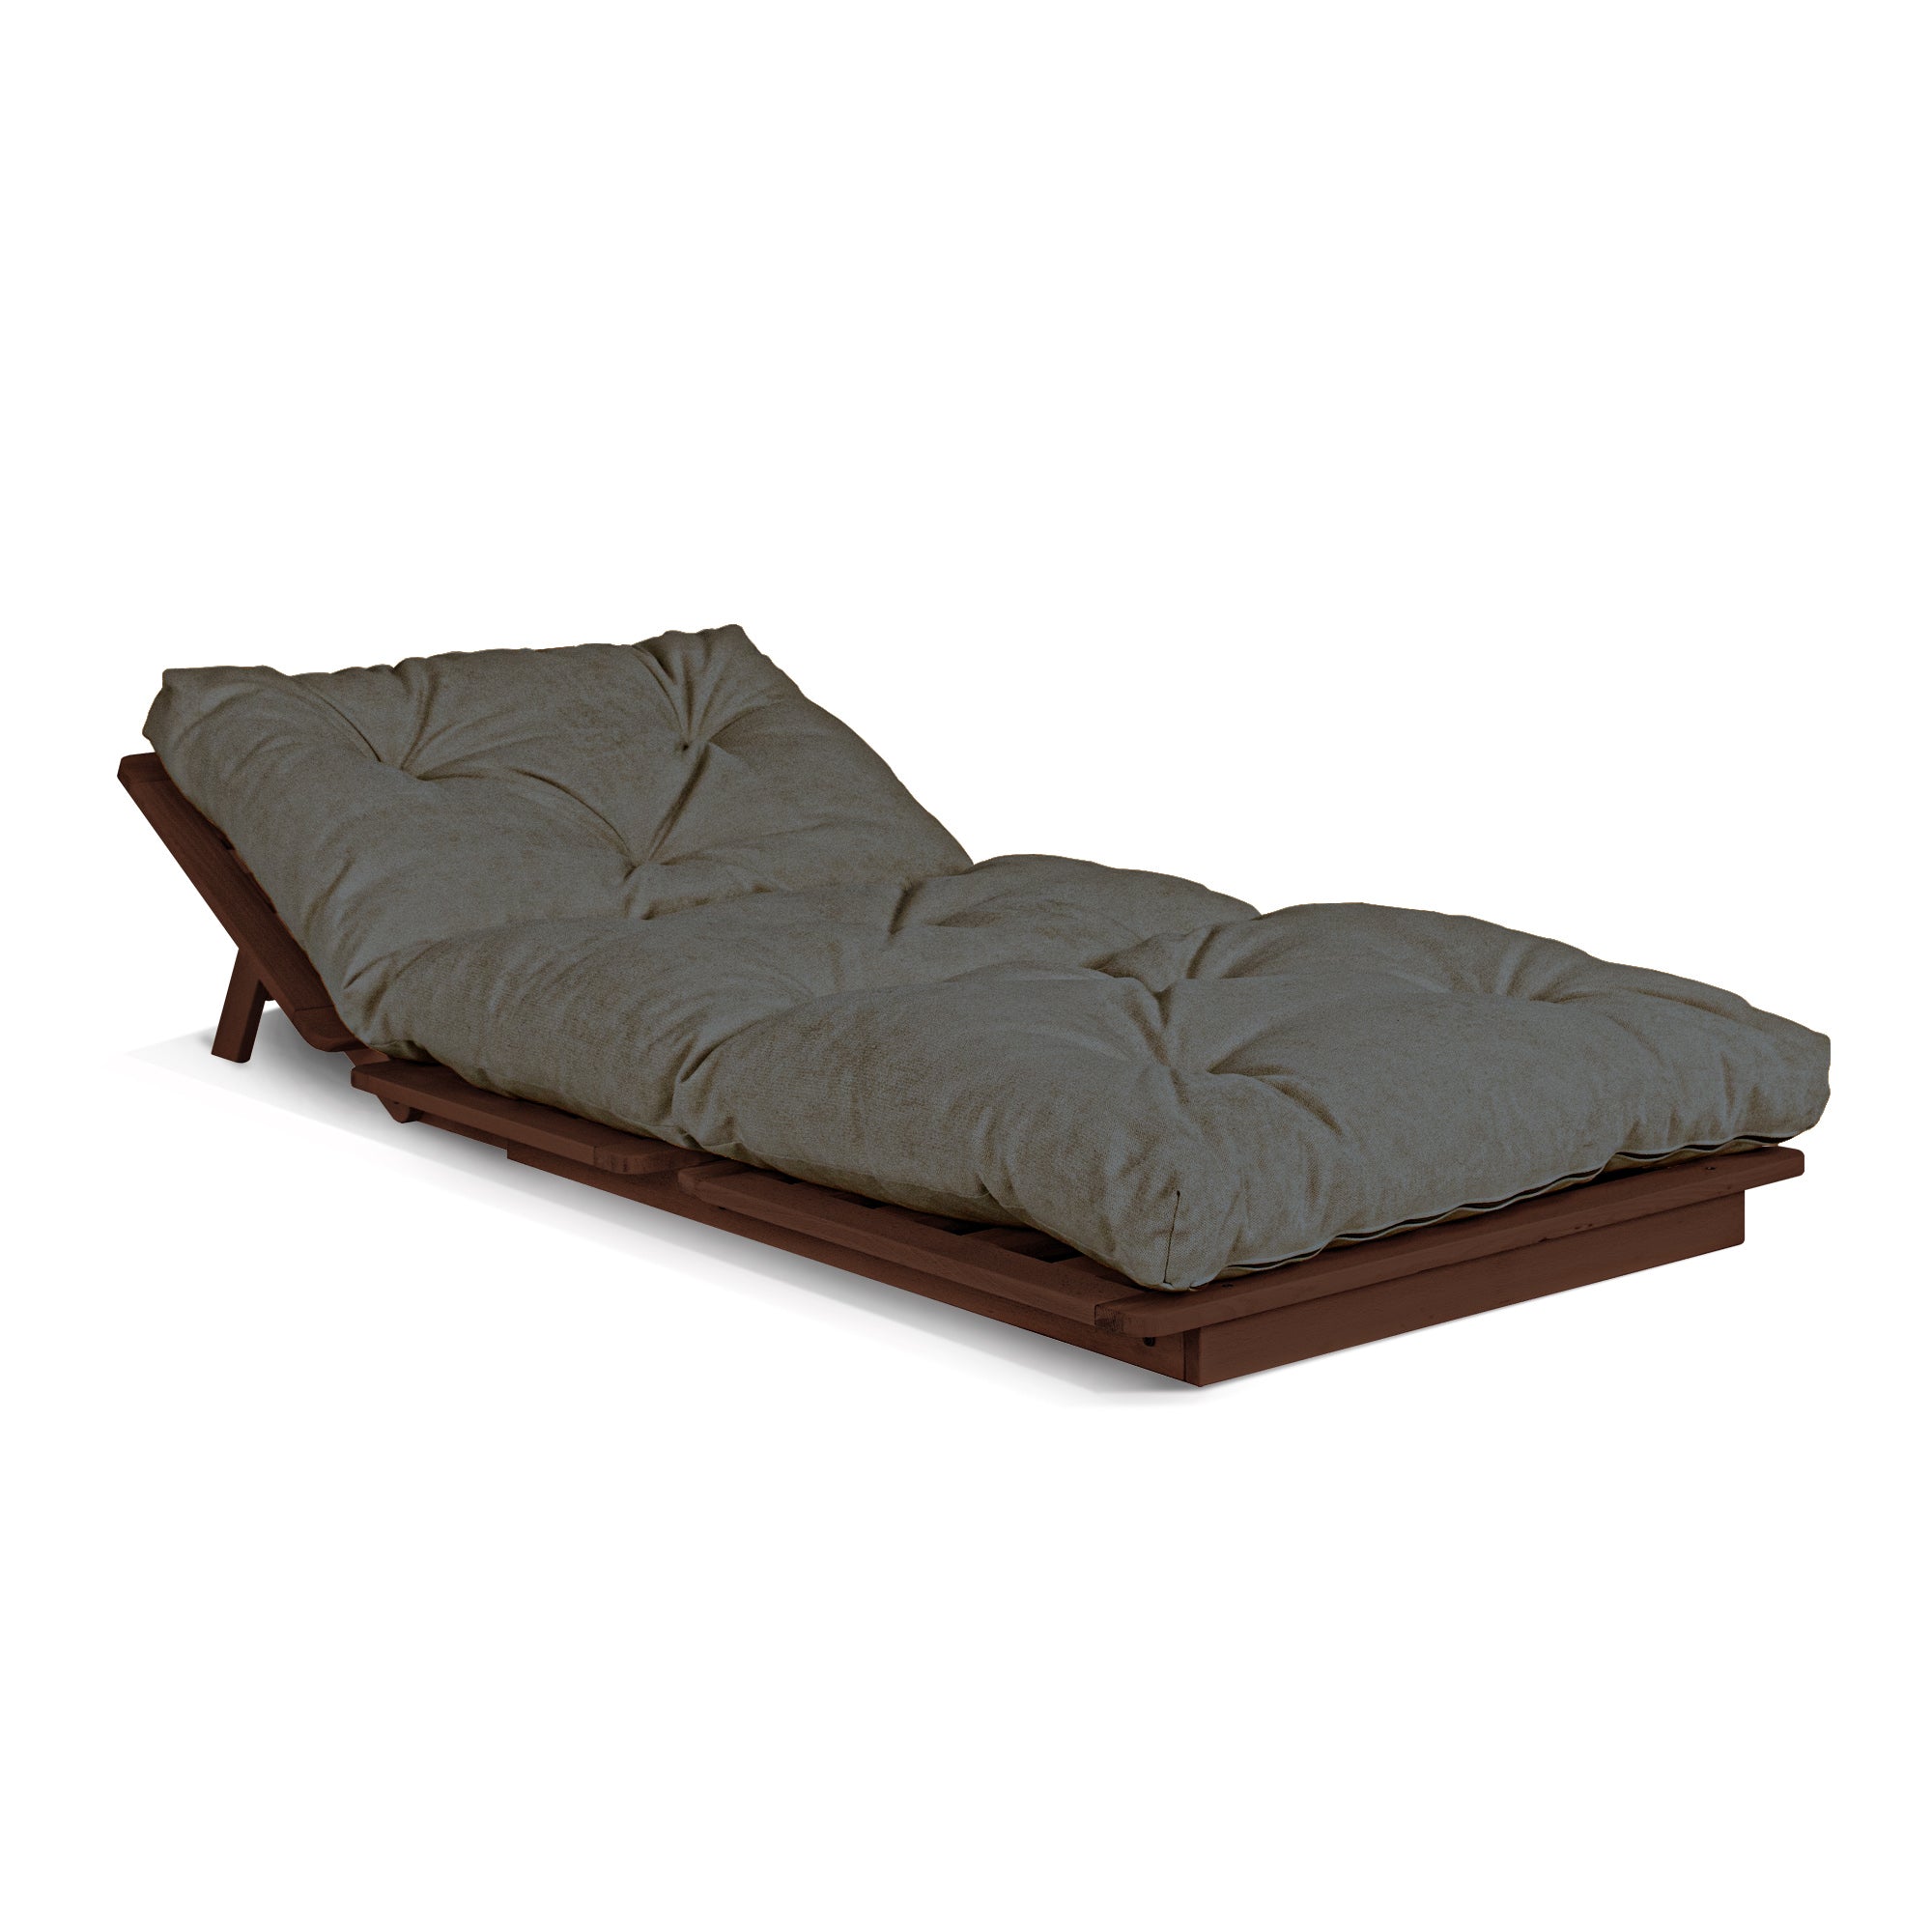 LAYTI-90 Single Futon Sofa Bed, Solid Hardwood, Brown